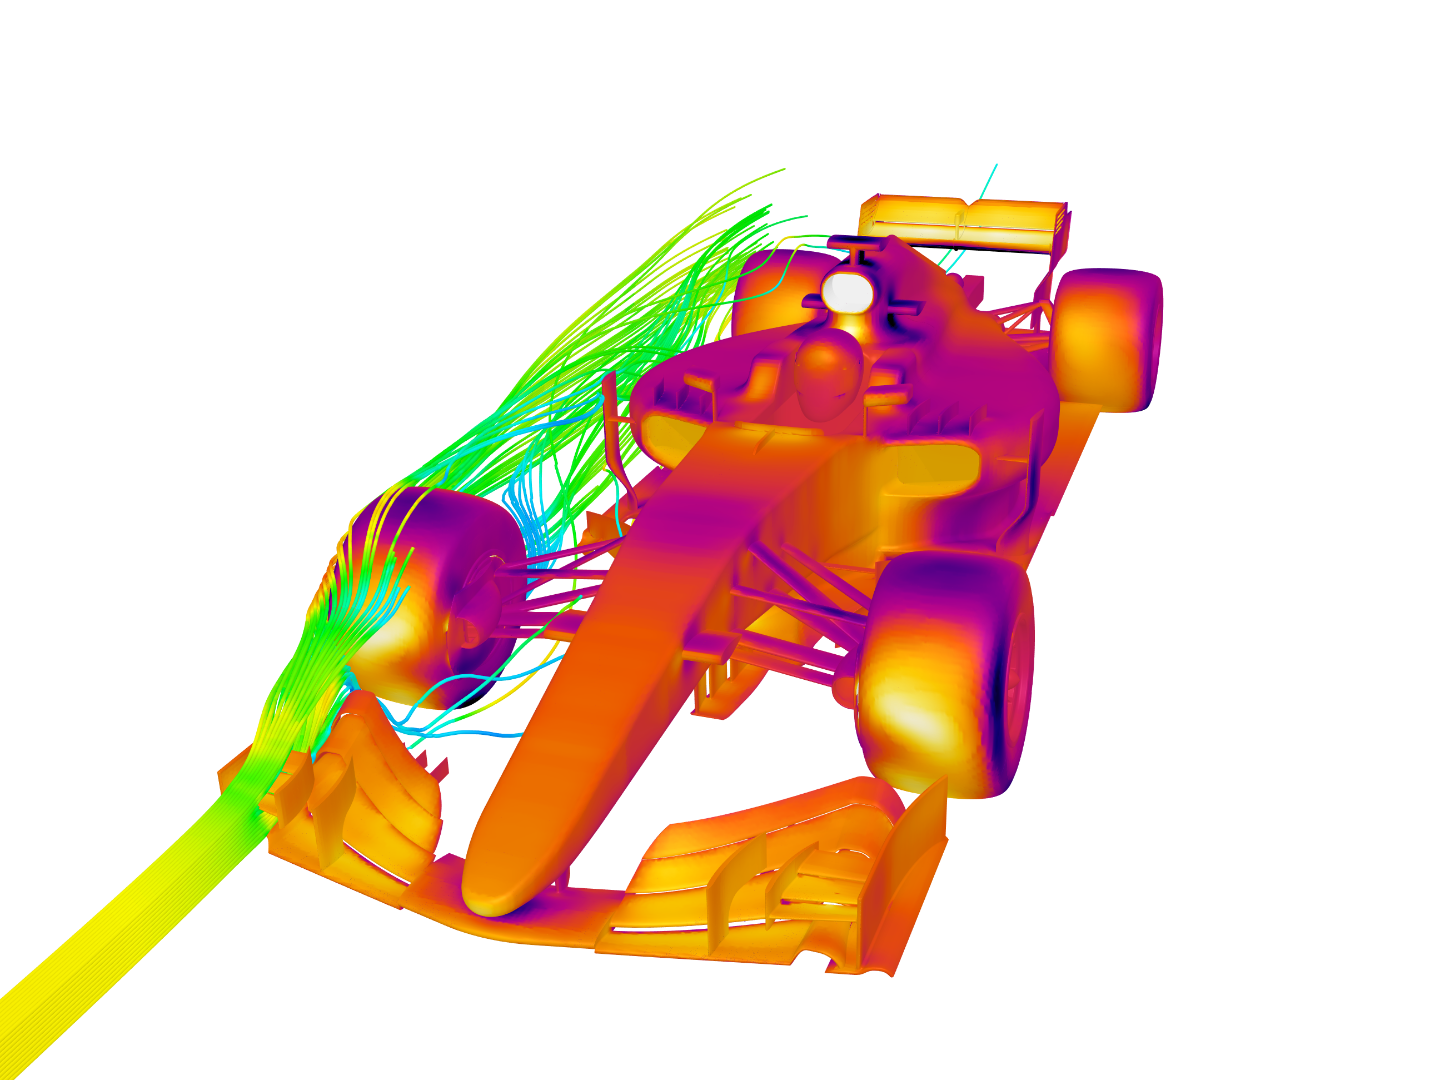 f1_aerodynamic_analysis image